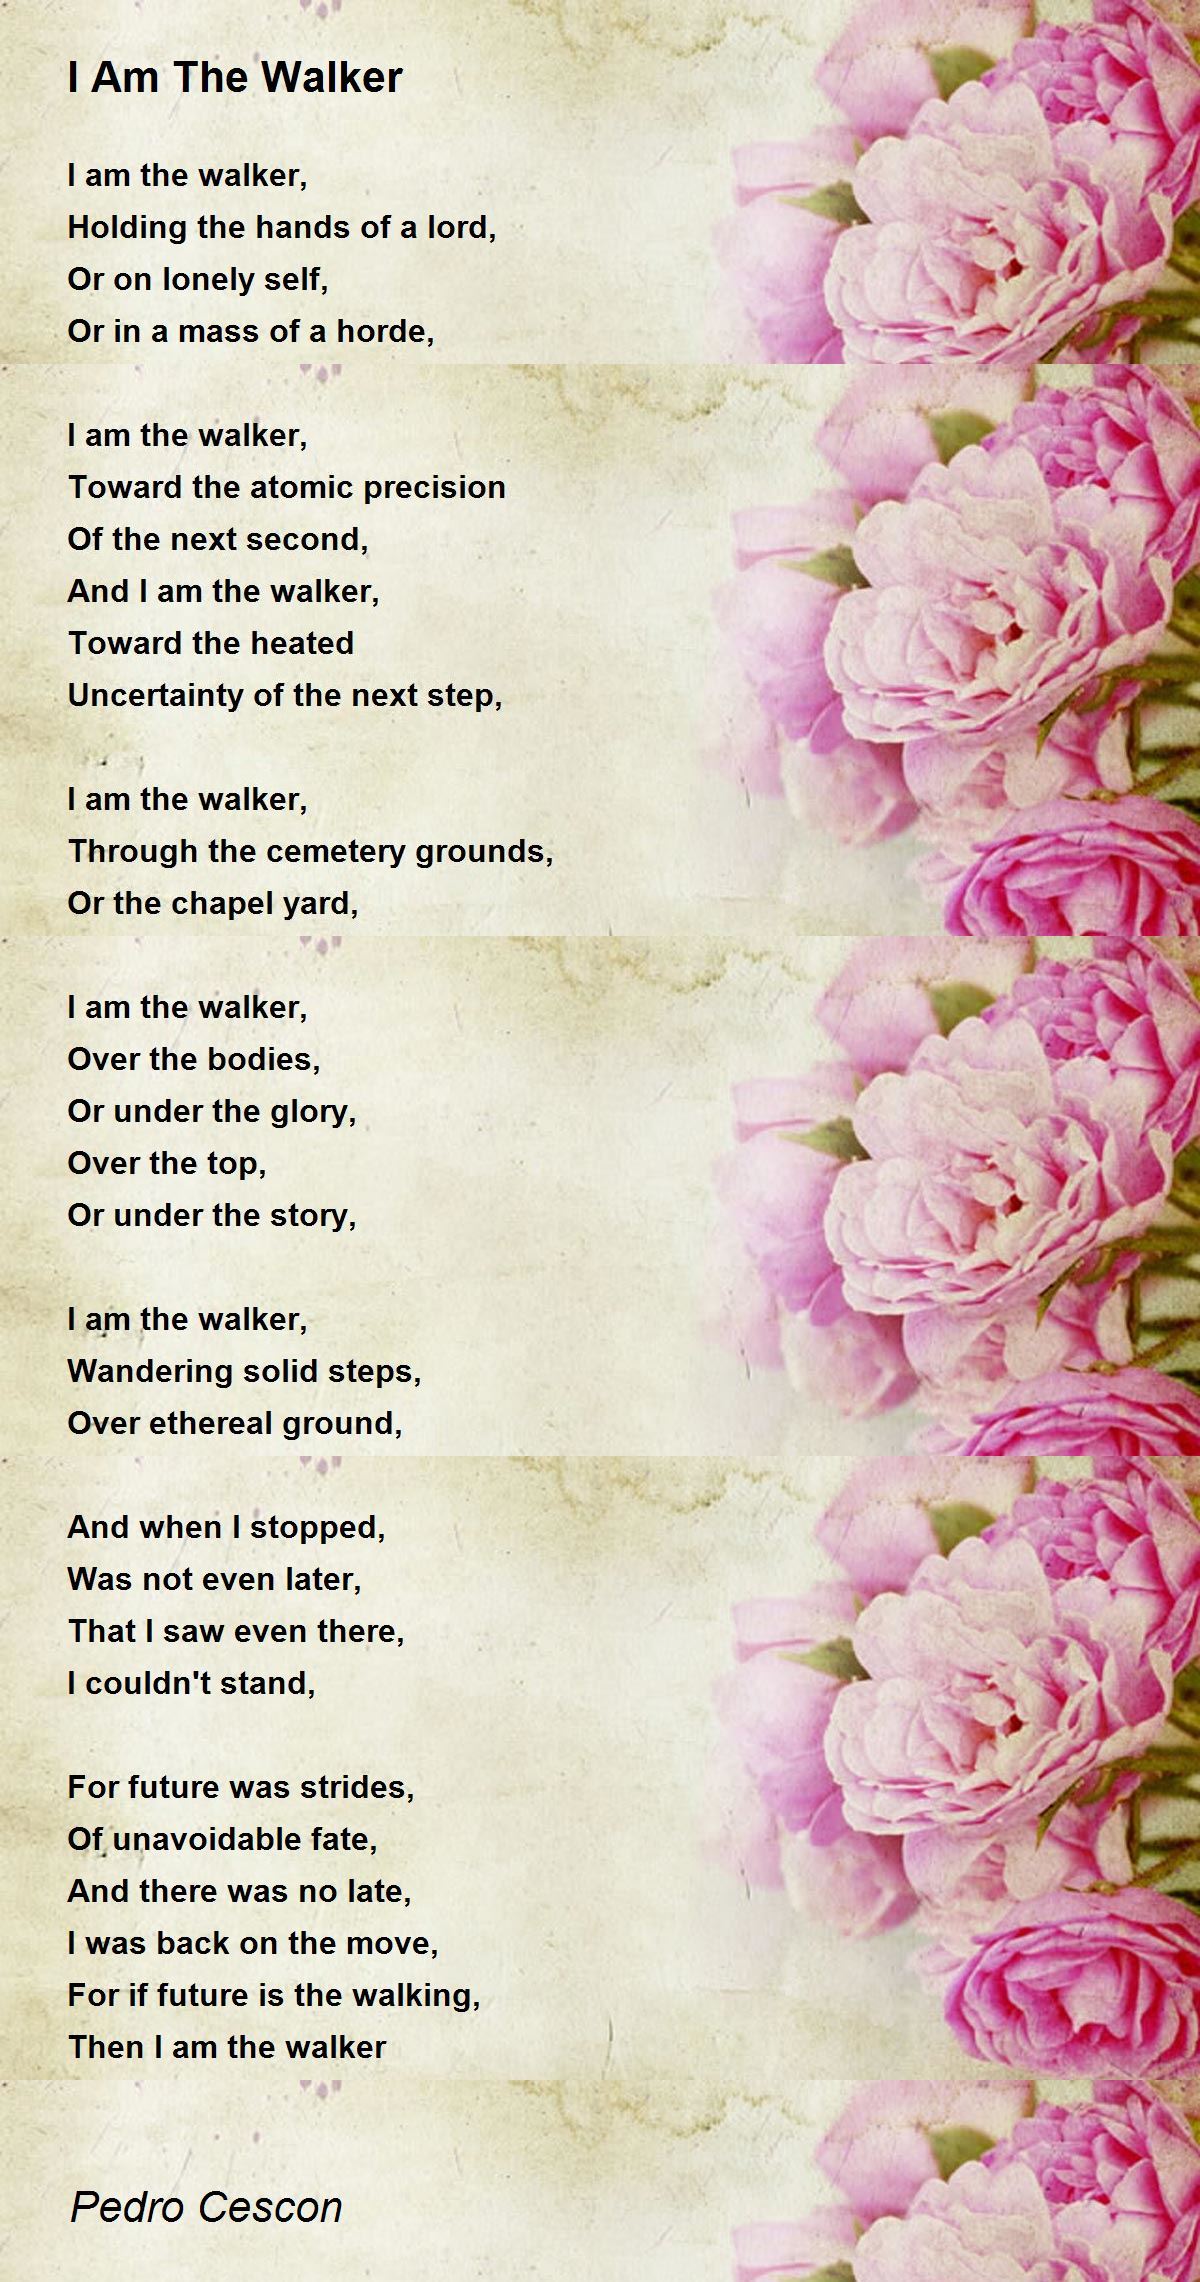 I Am The Walker by Pedro Cescon - I Am The Walker Poem